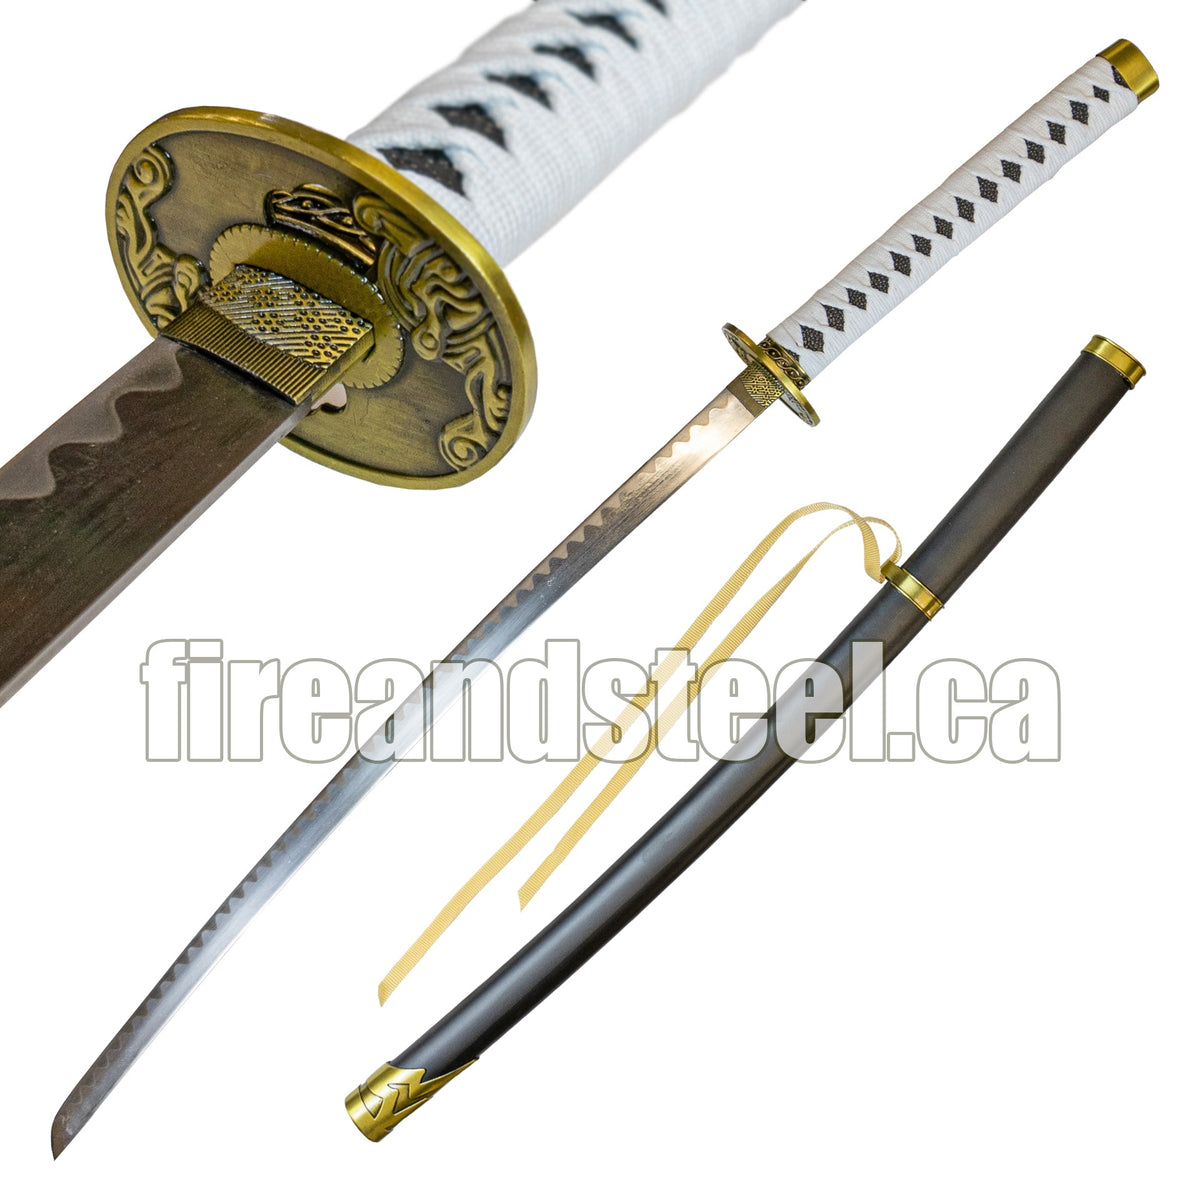 yamato sword